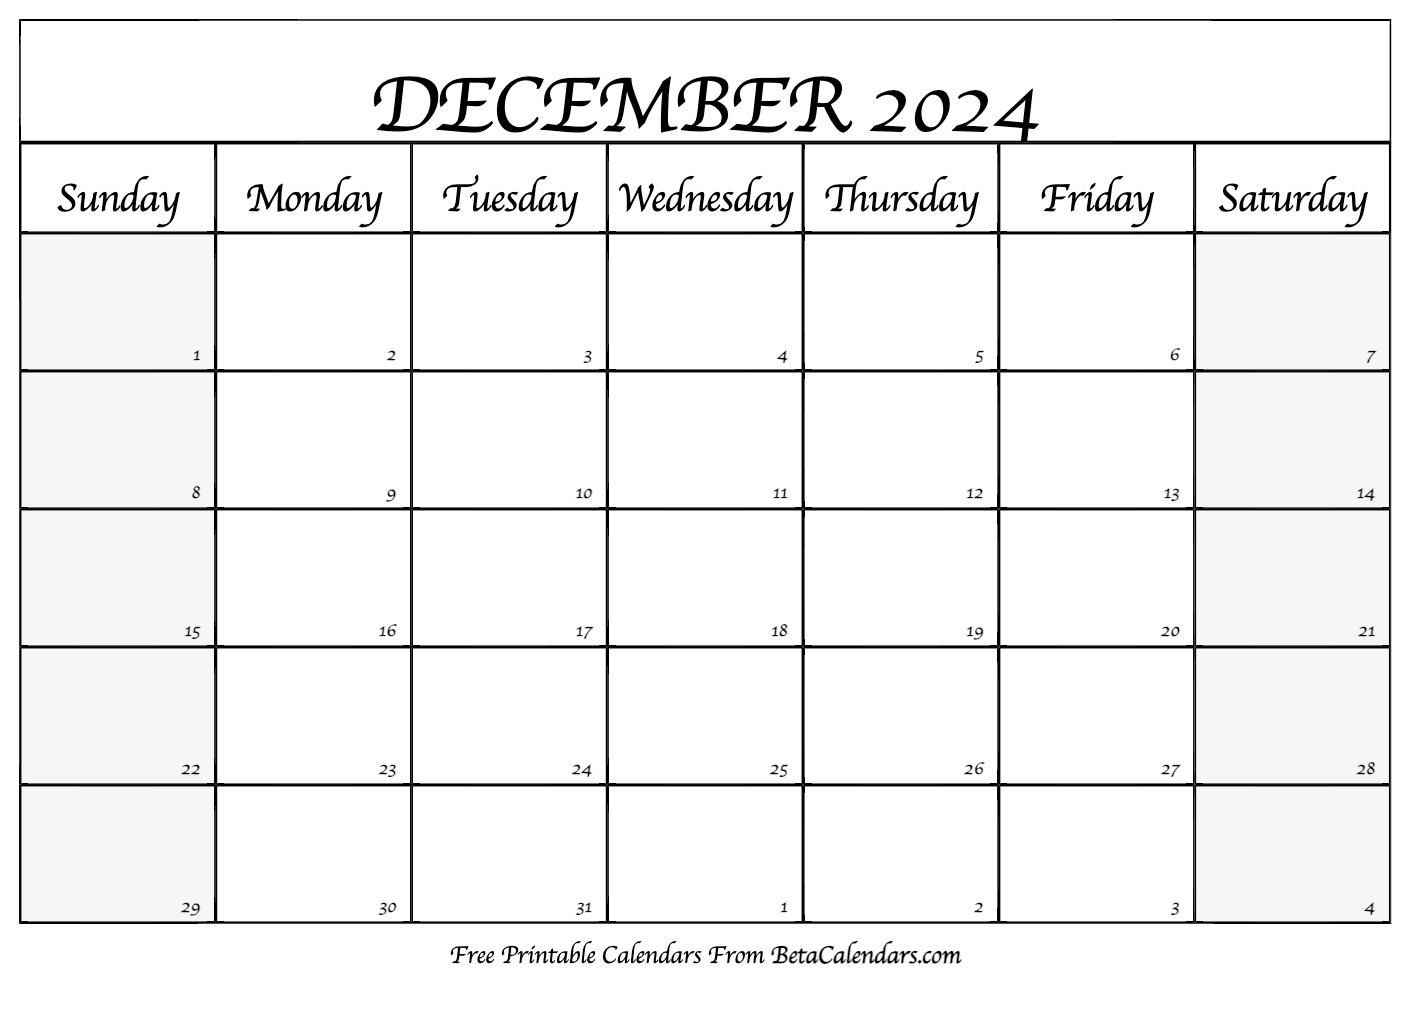 Blank December 2024 Calendar Template